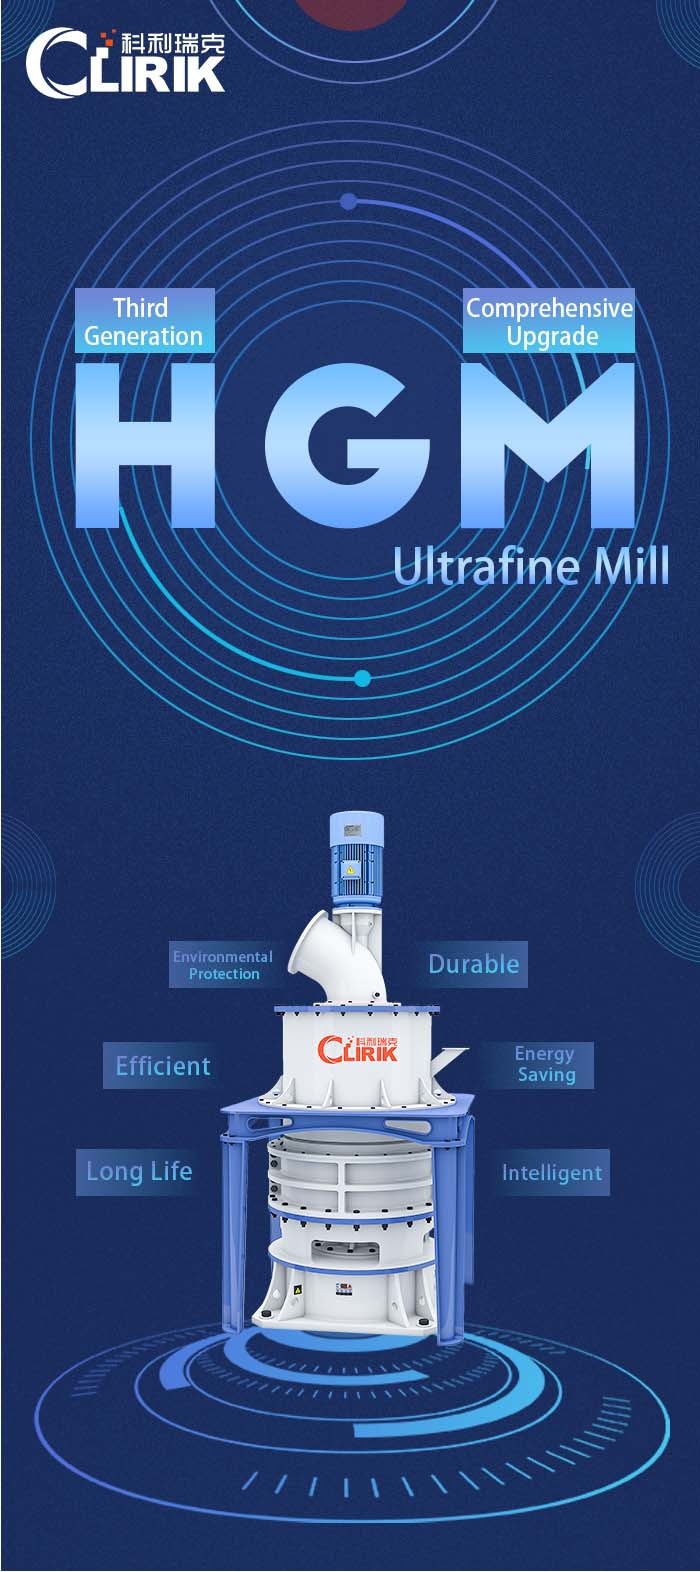 Third generation HGM micro powder grinding mill